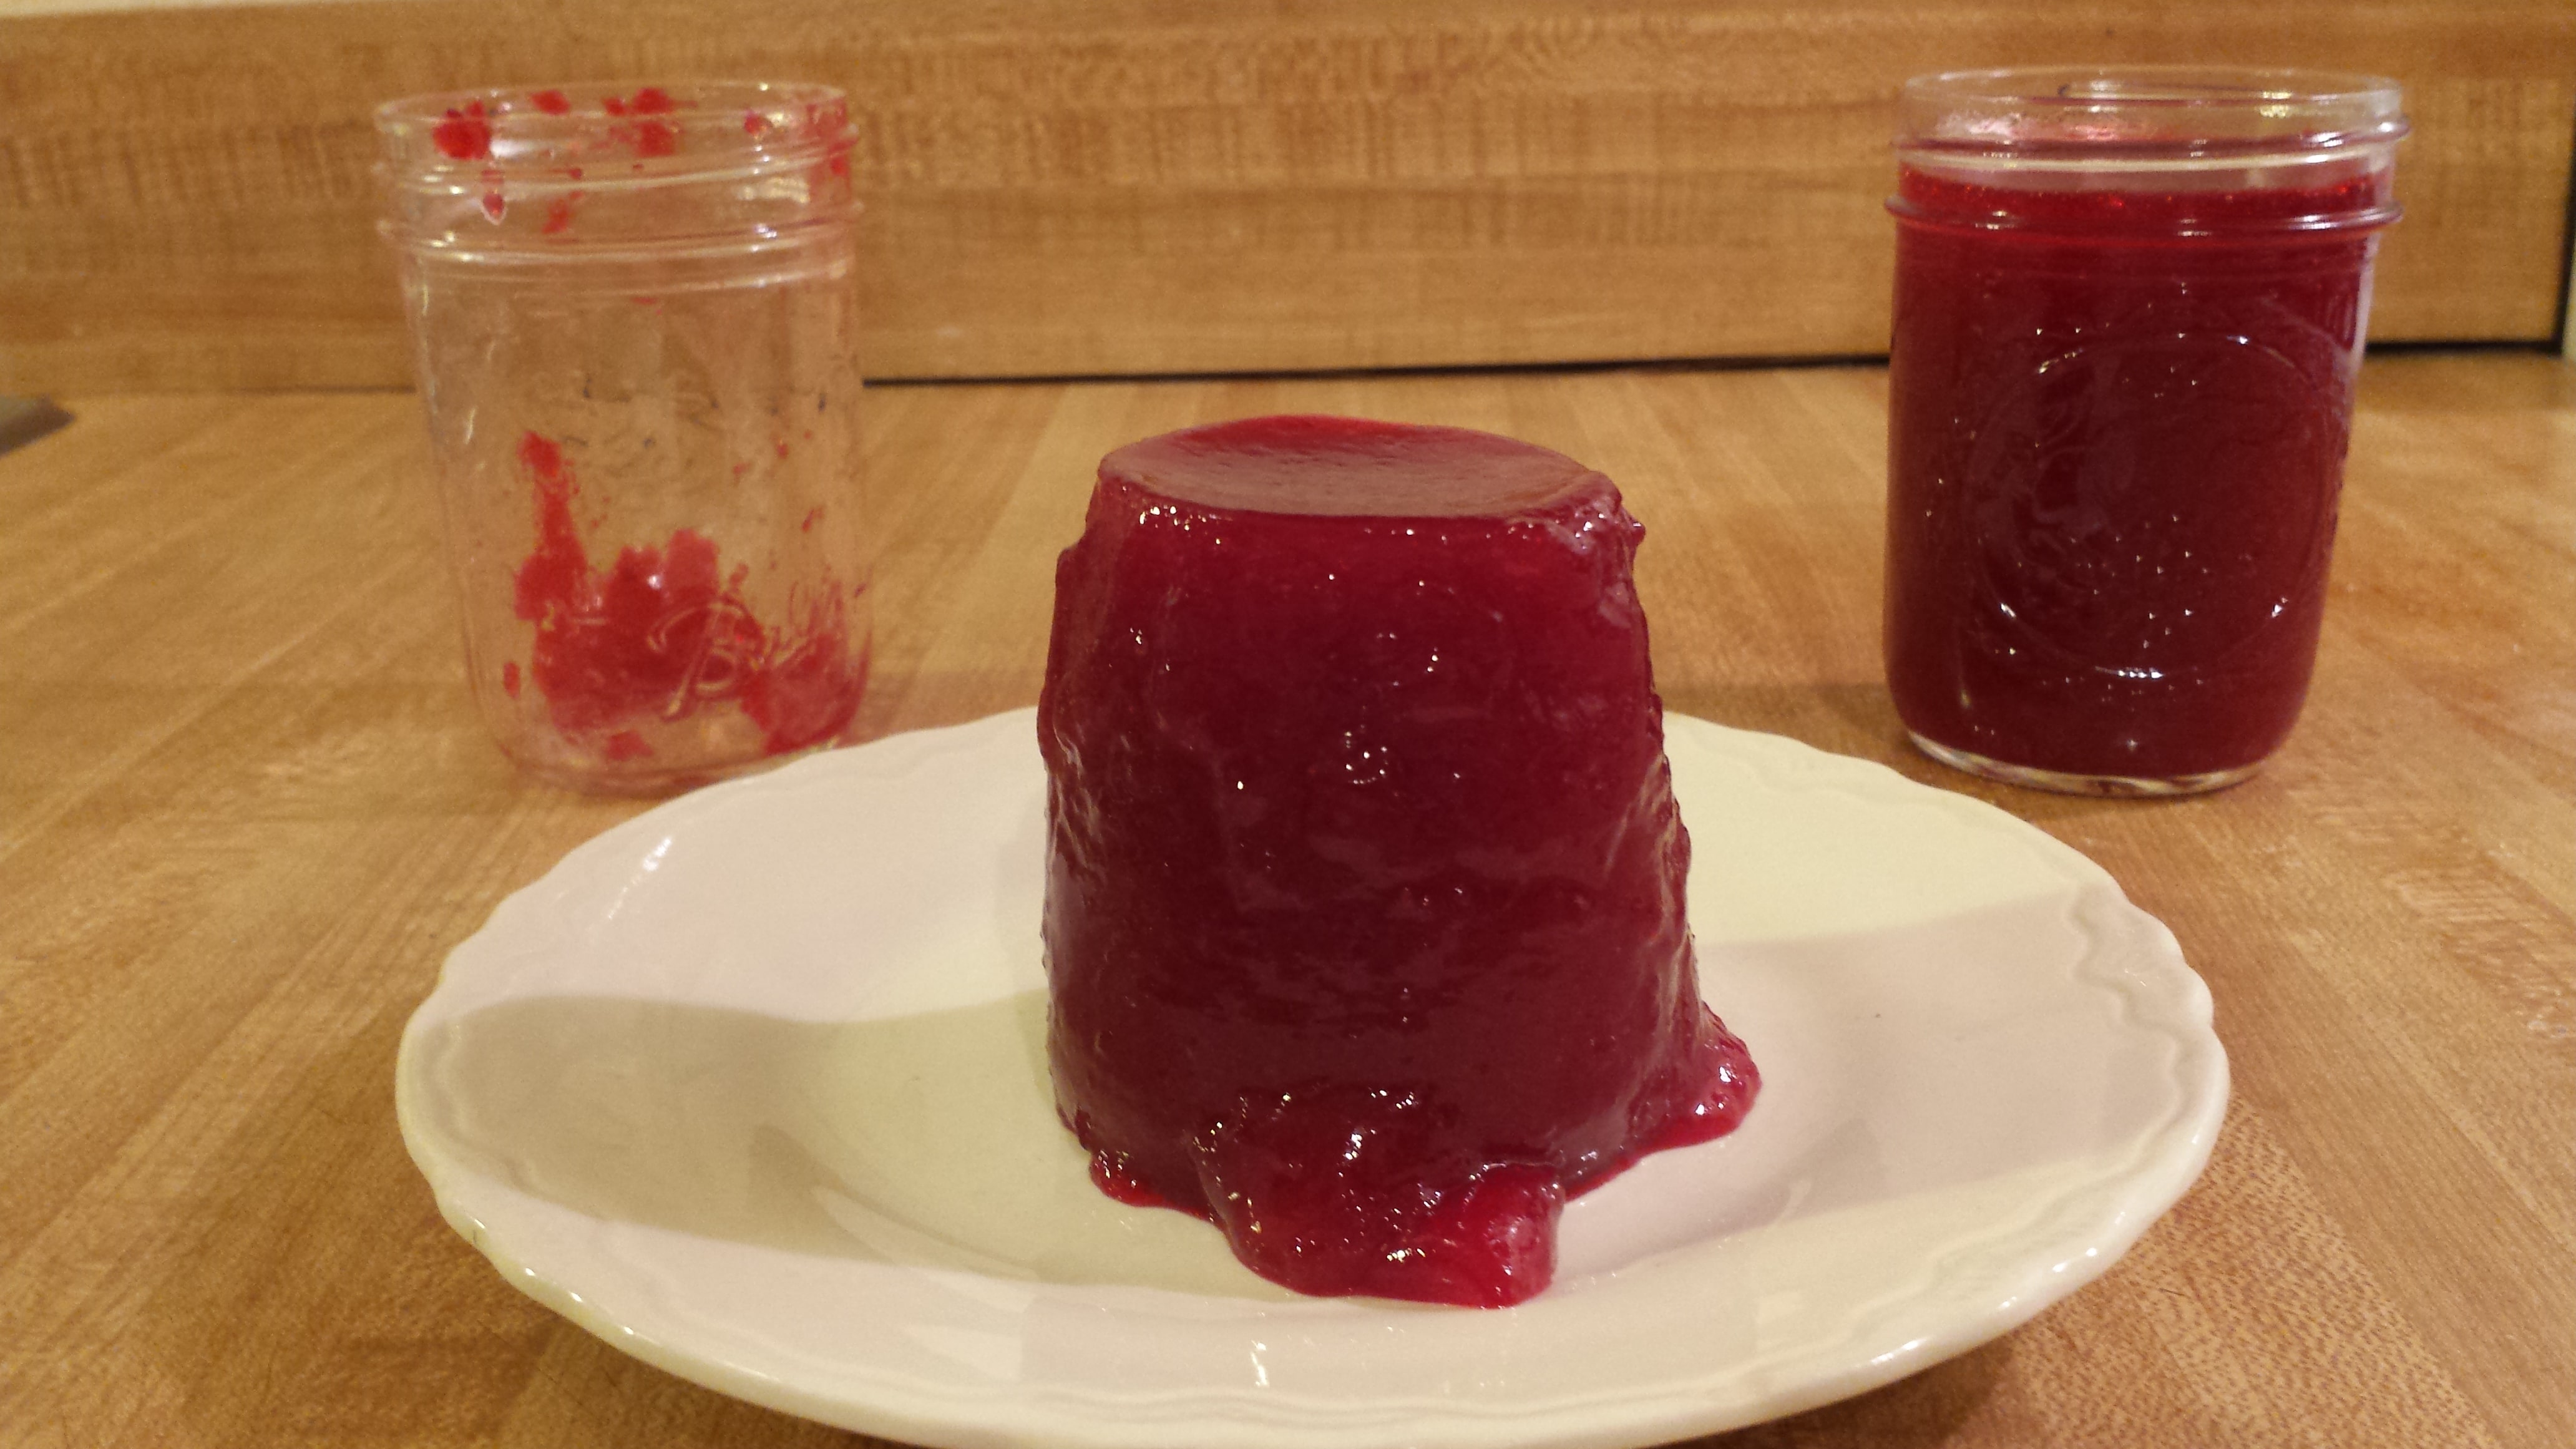 Sugar free jellied cranberry sauce recipe